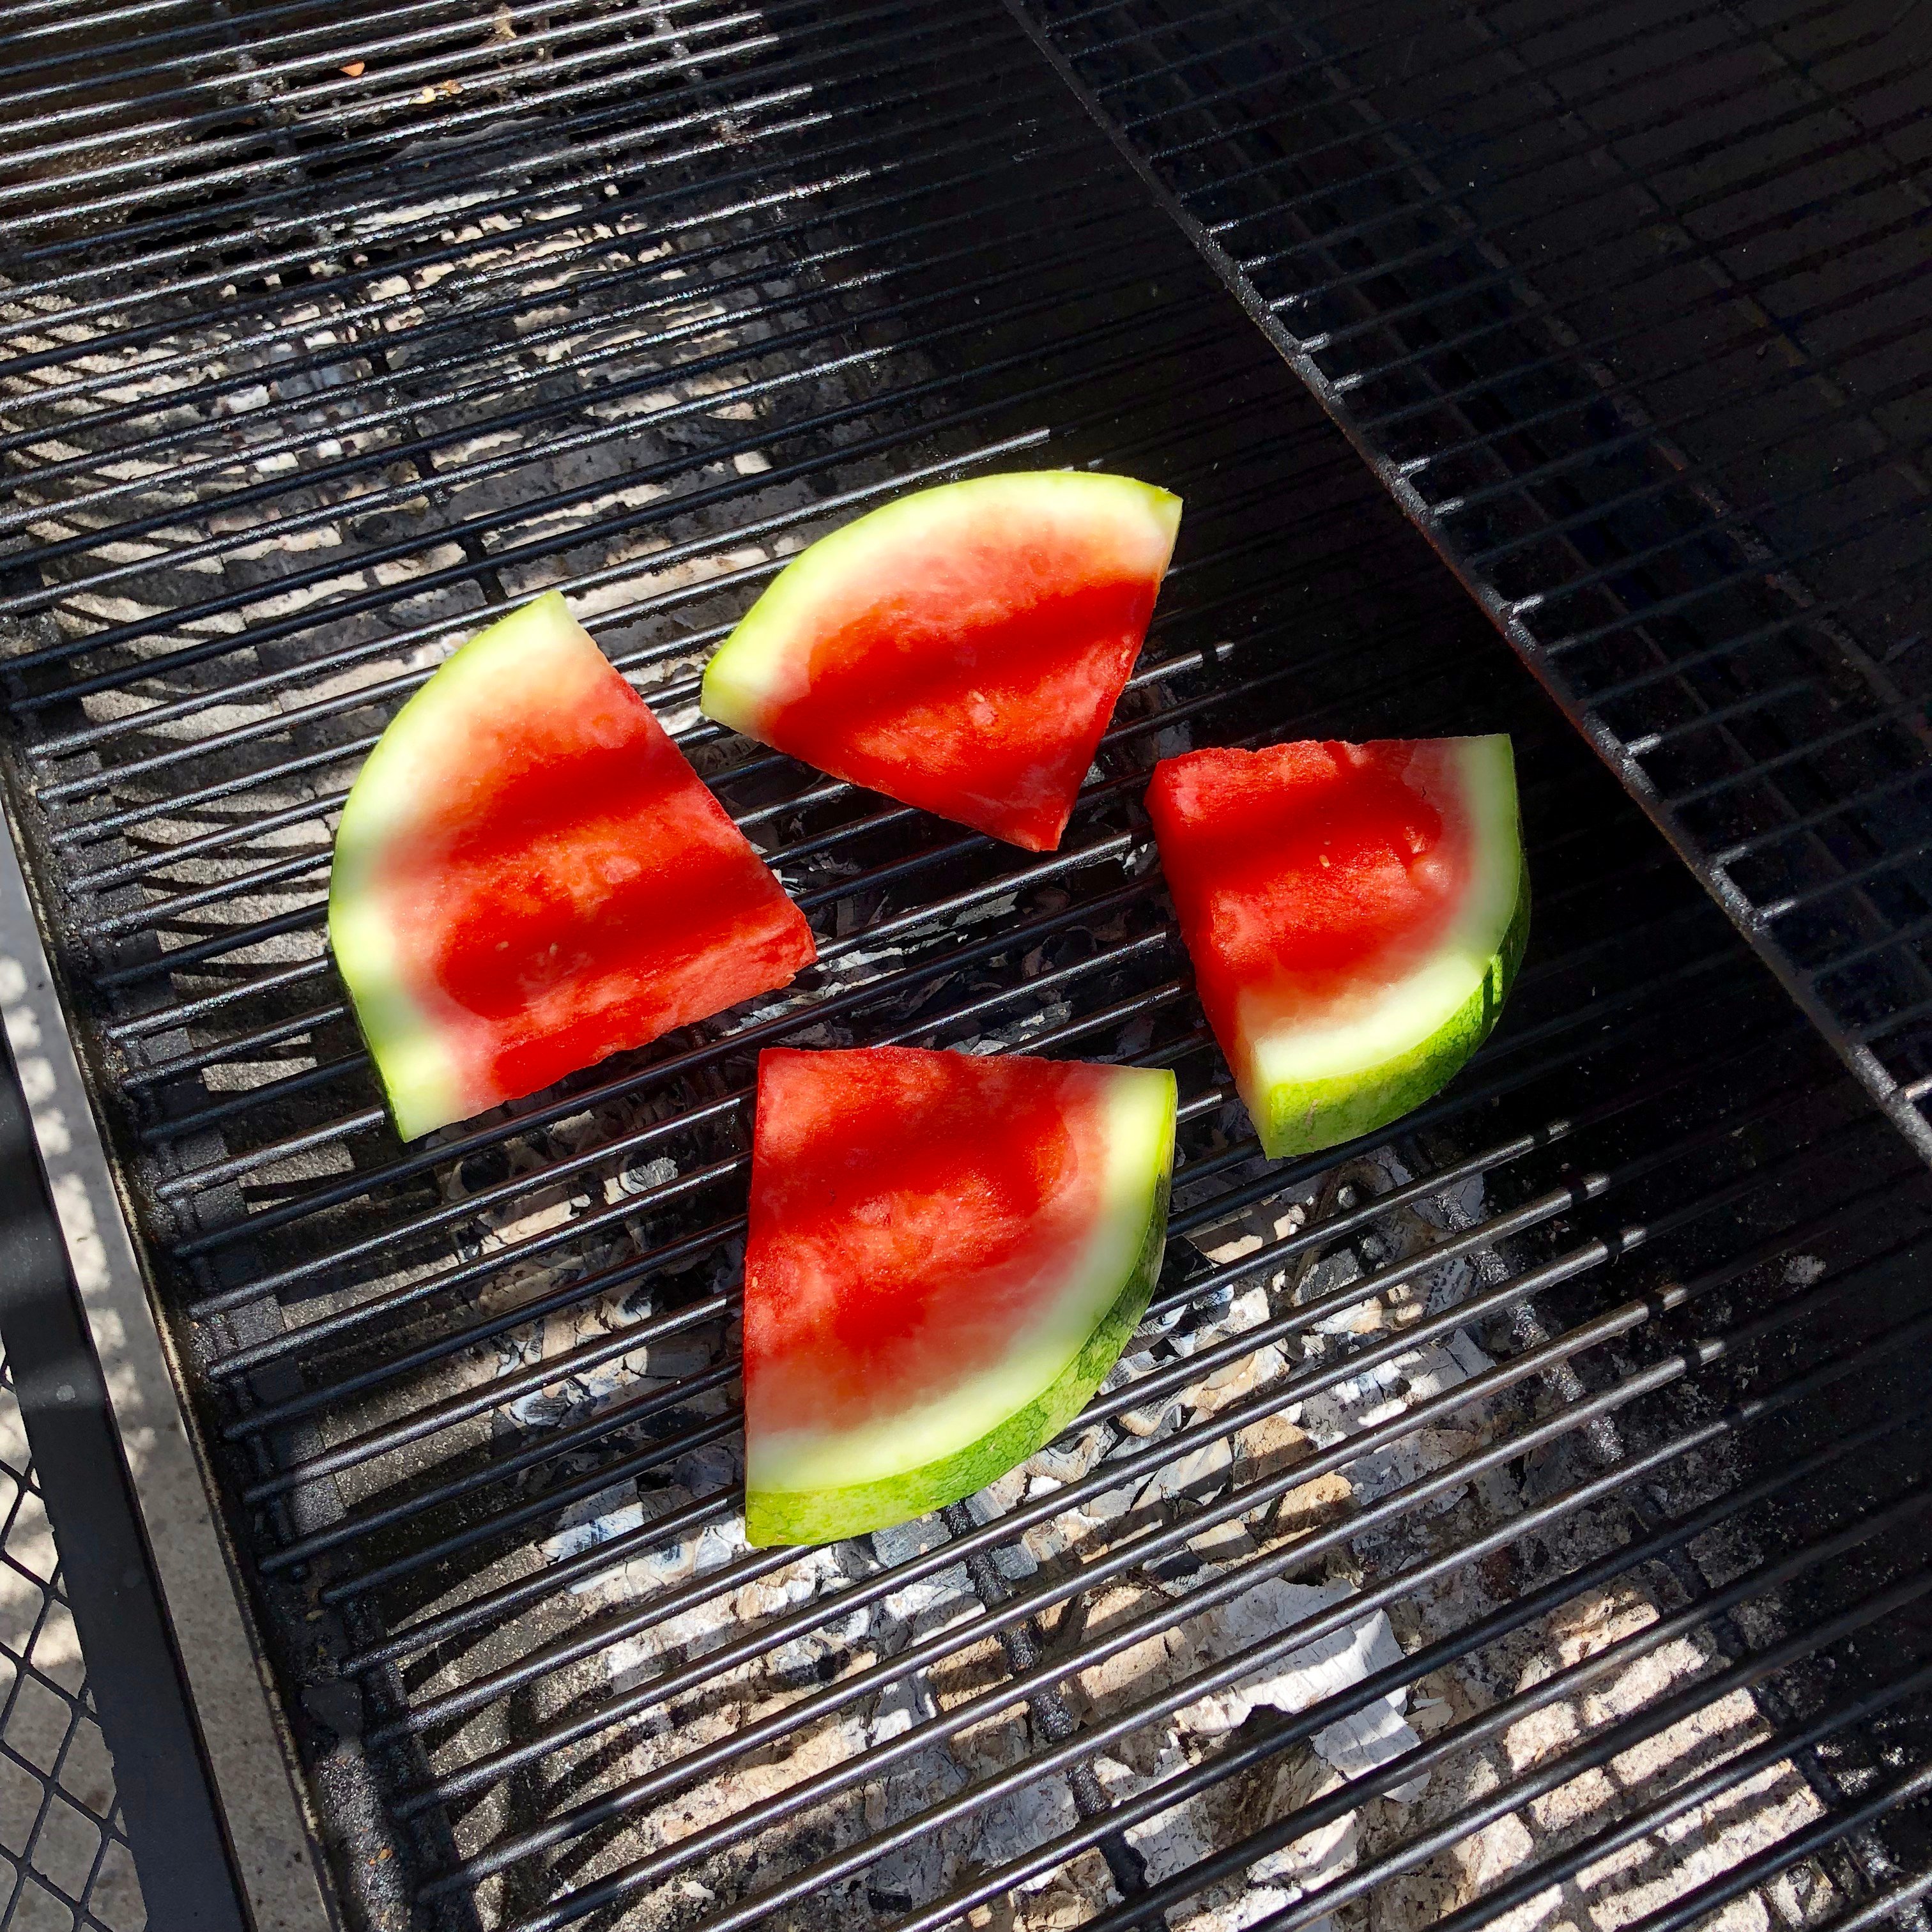 Grilling watermelon